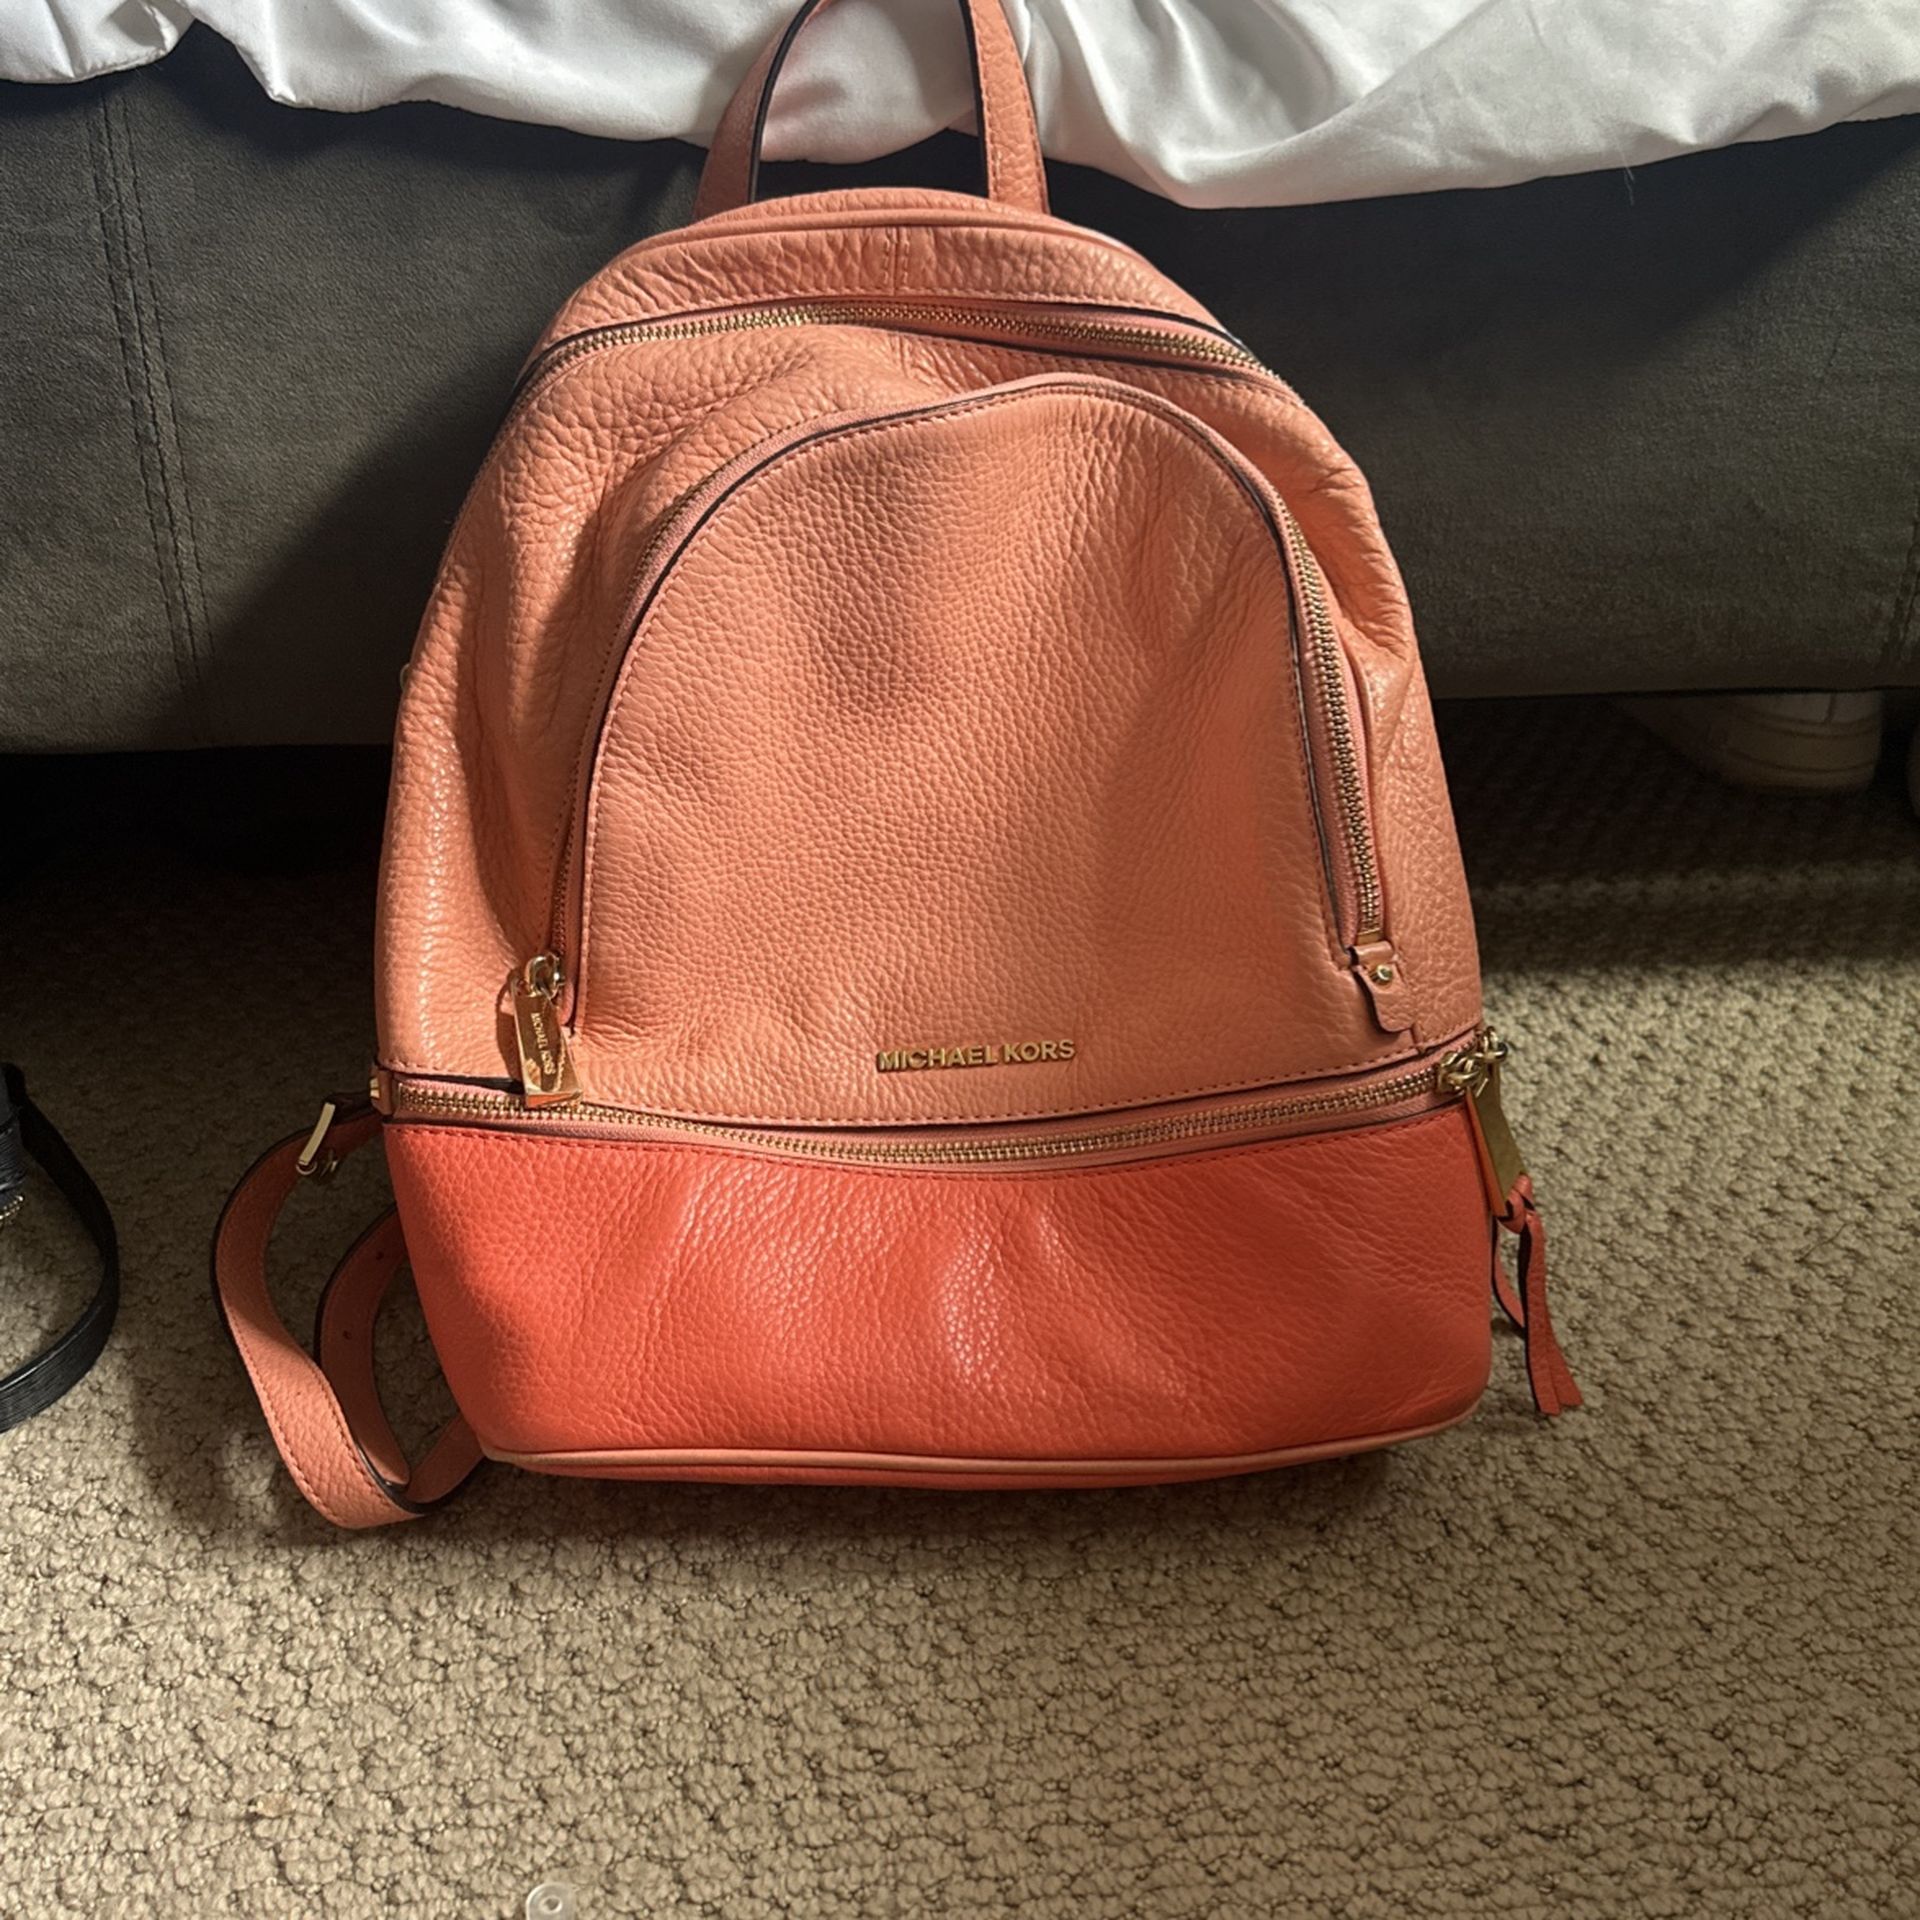 Michael Kors Medium Leather Backpack - Peach/Grapefruit